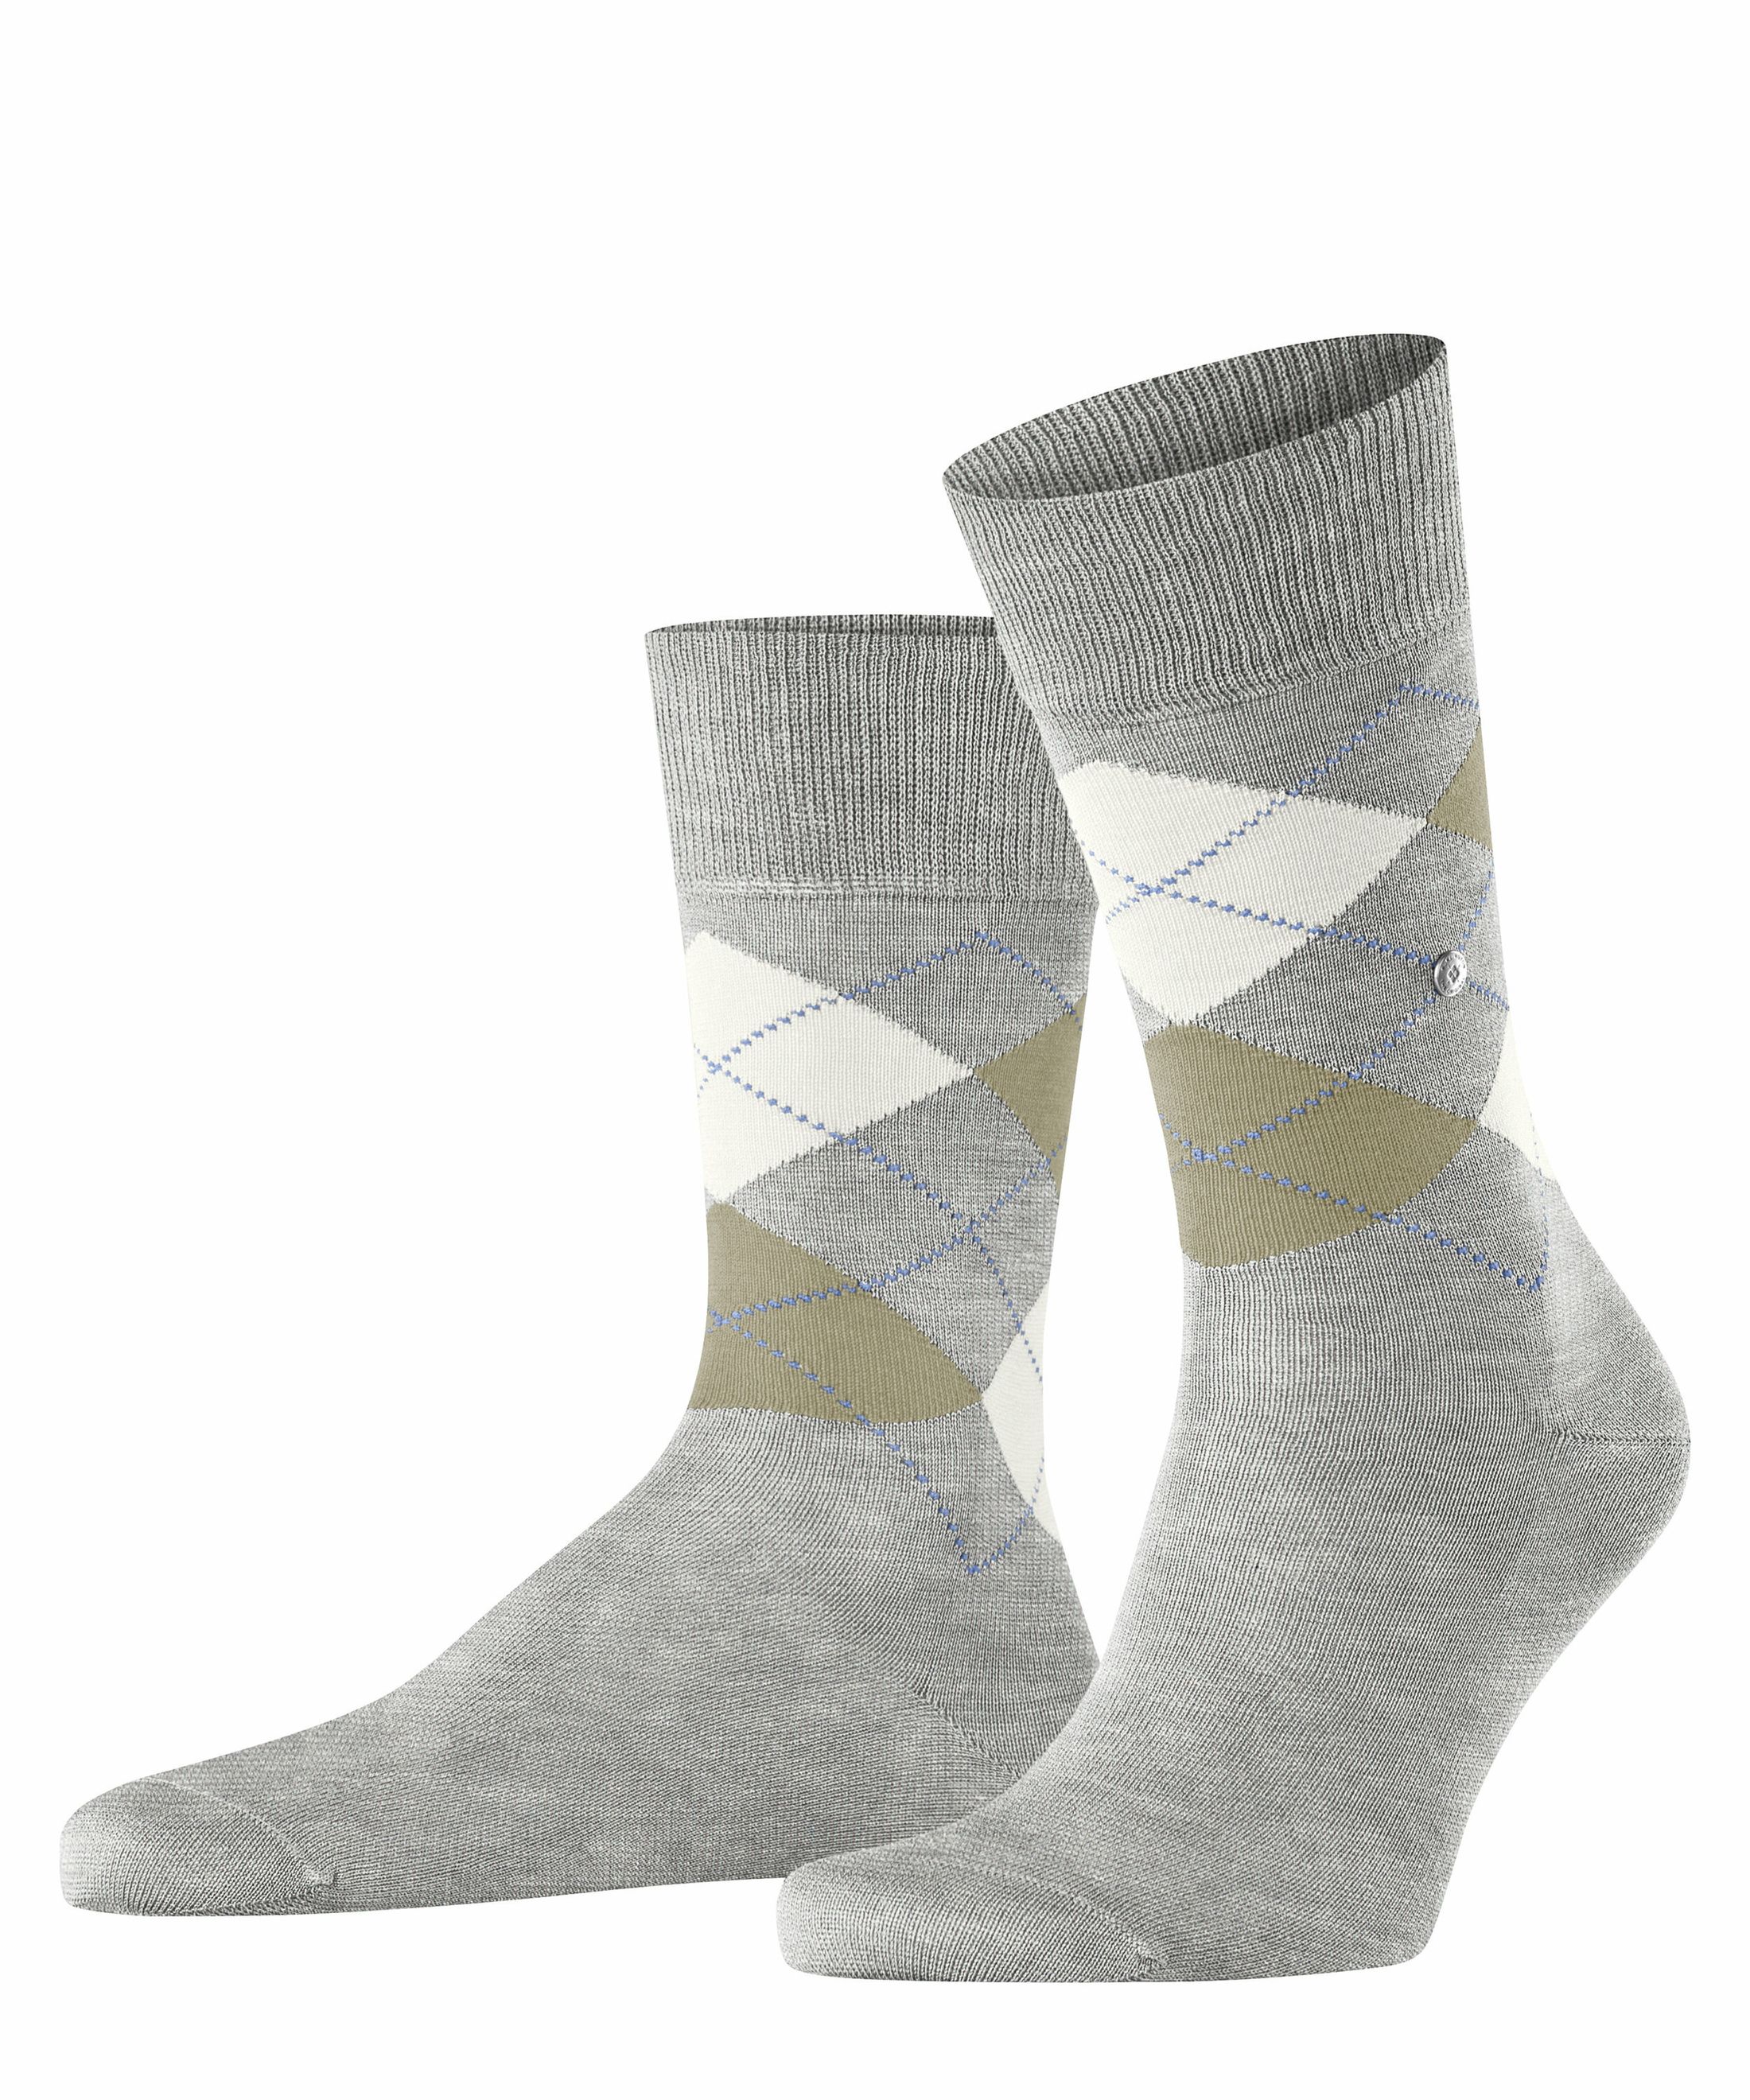 Burlington Socks Gray 3623 Grey size 40-46